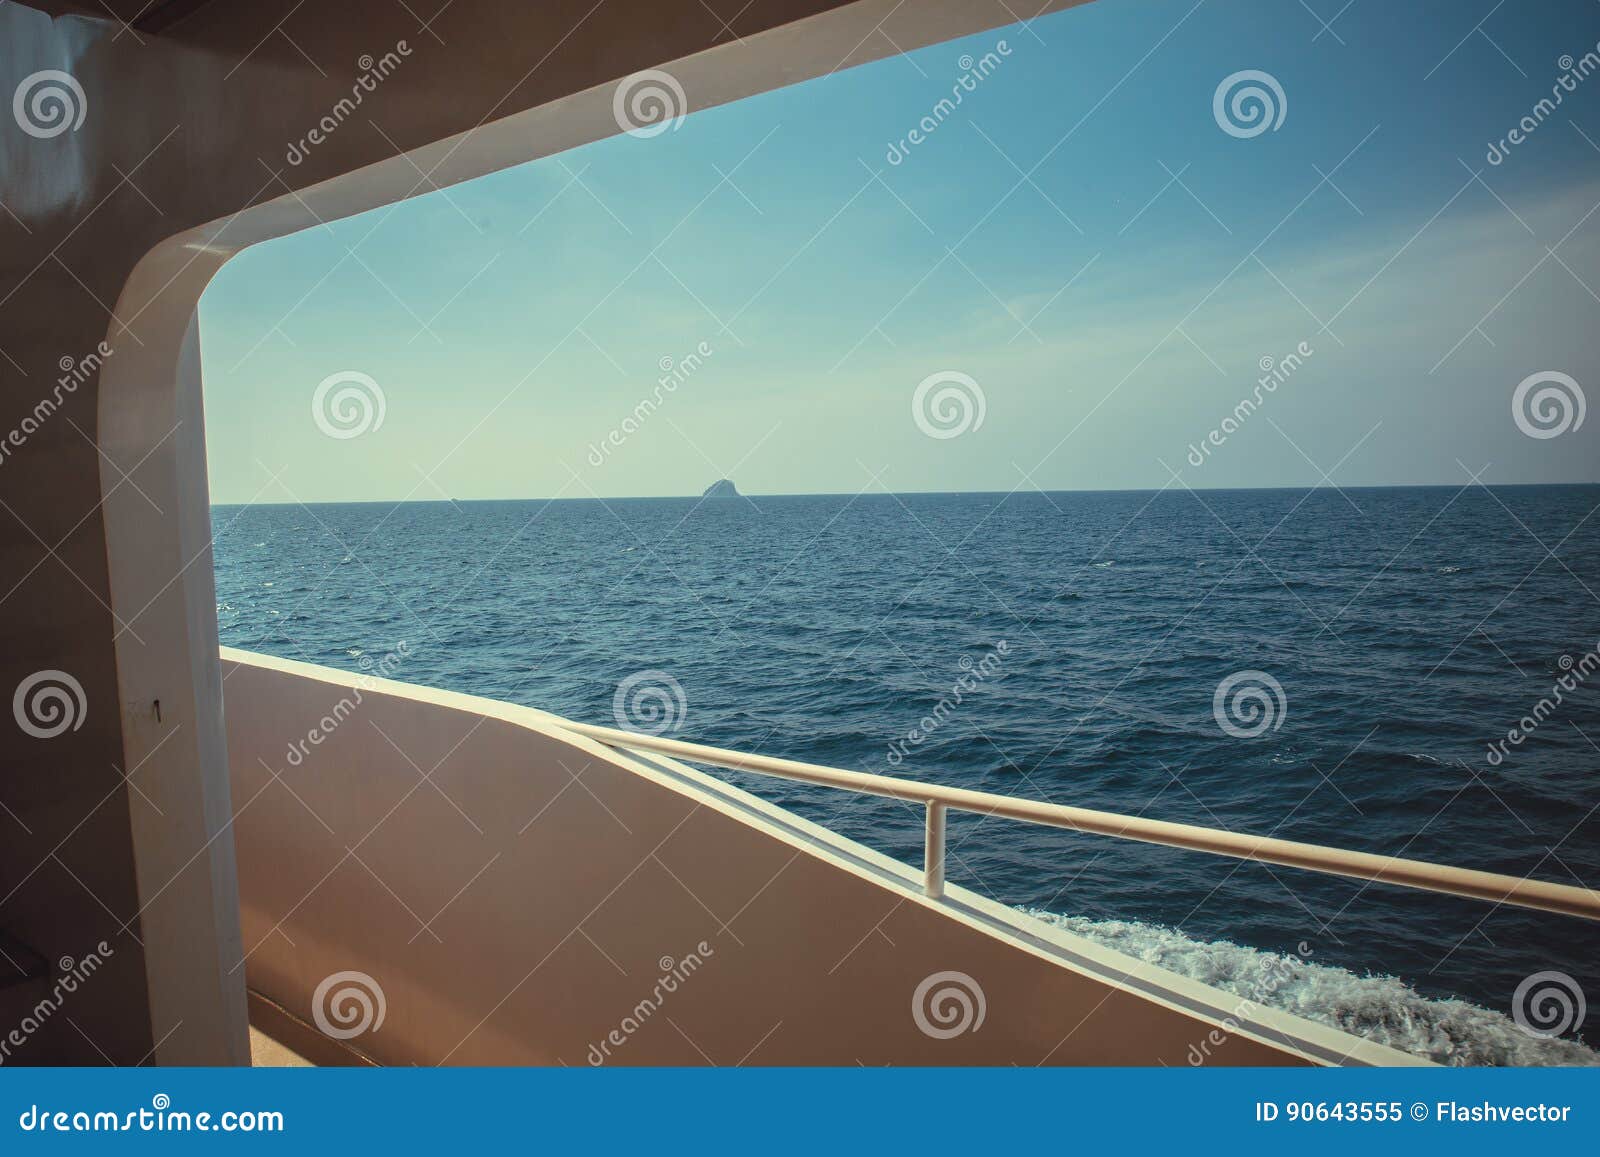 ocean view yacht windows